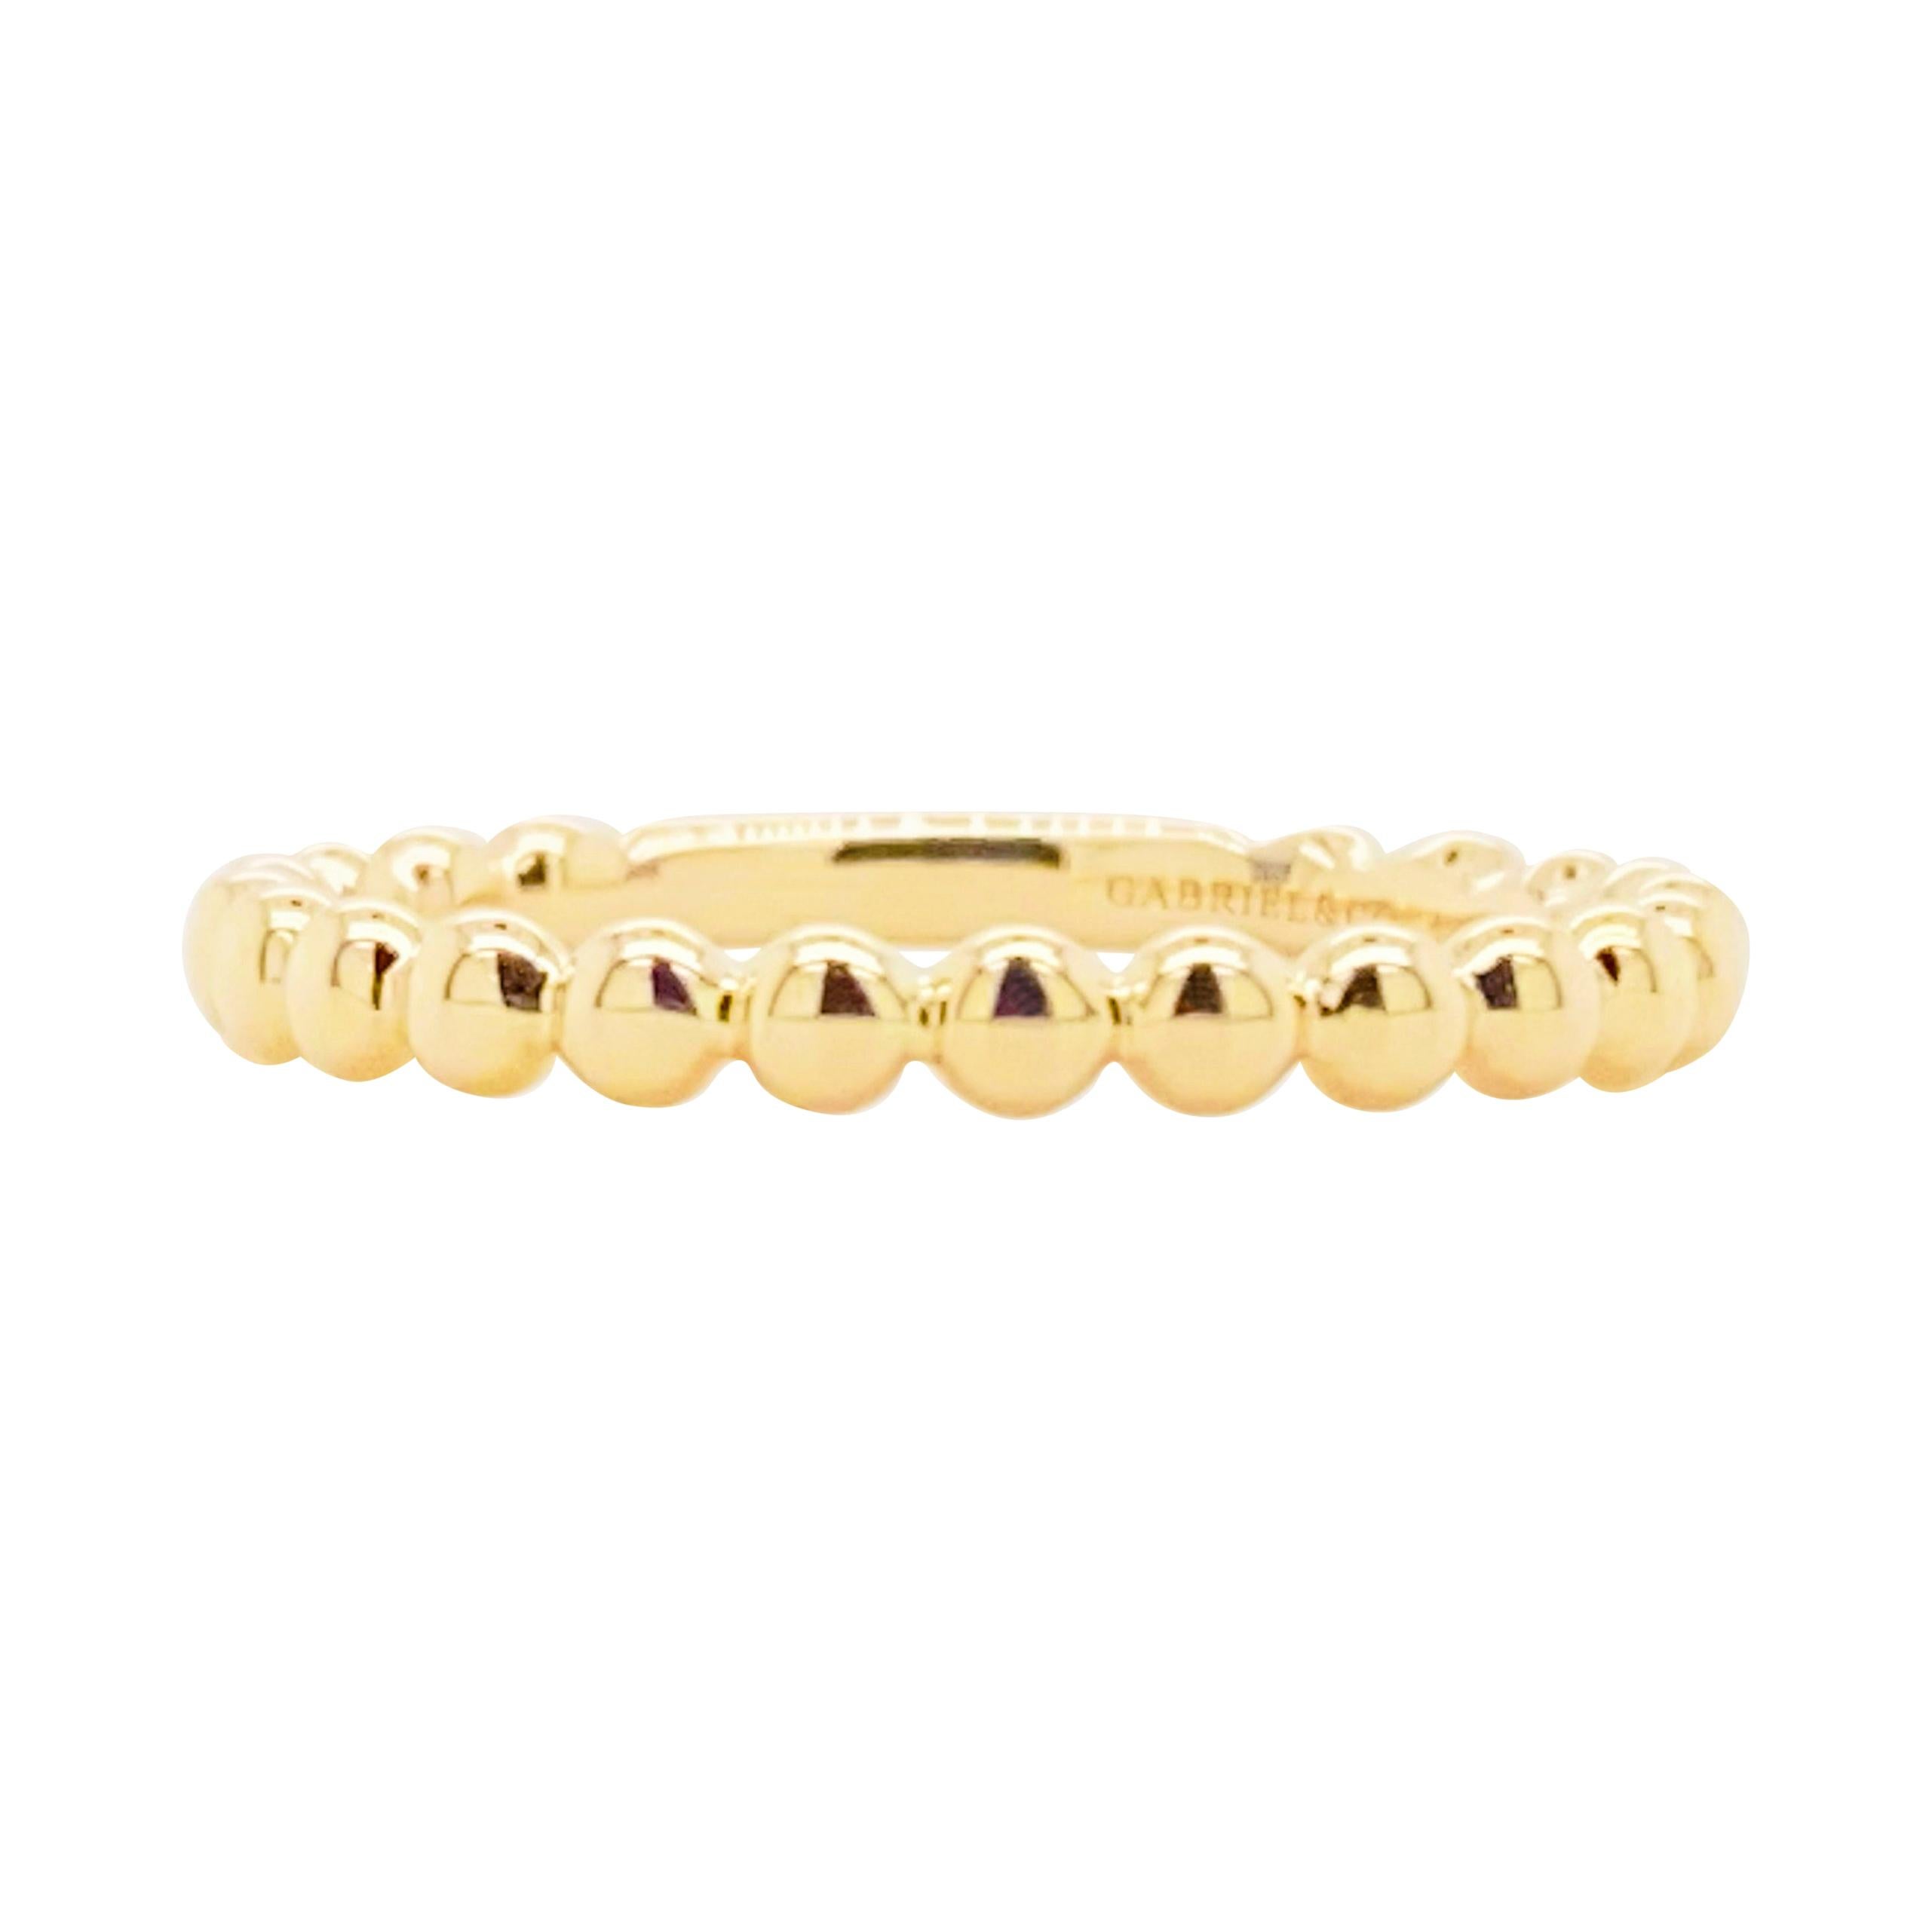 Im Angebot: Goldperlenring, 14 Karat Gelbgold Perlenring, stapelbarer Ring, 2021 Echt ()